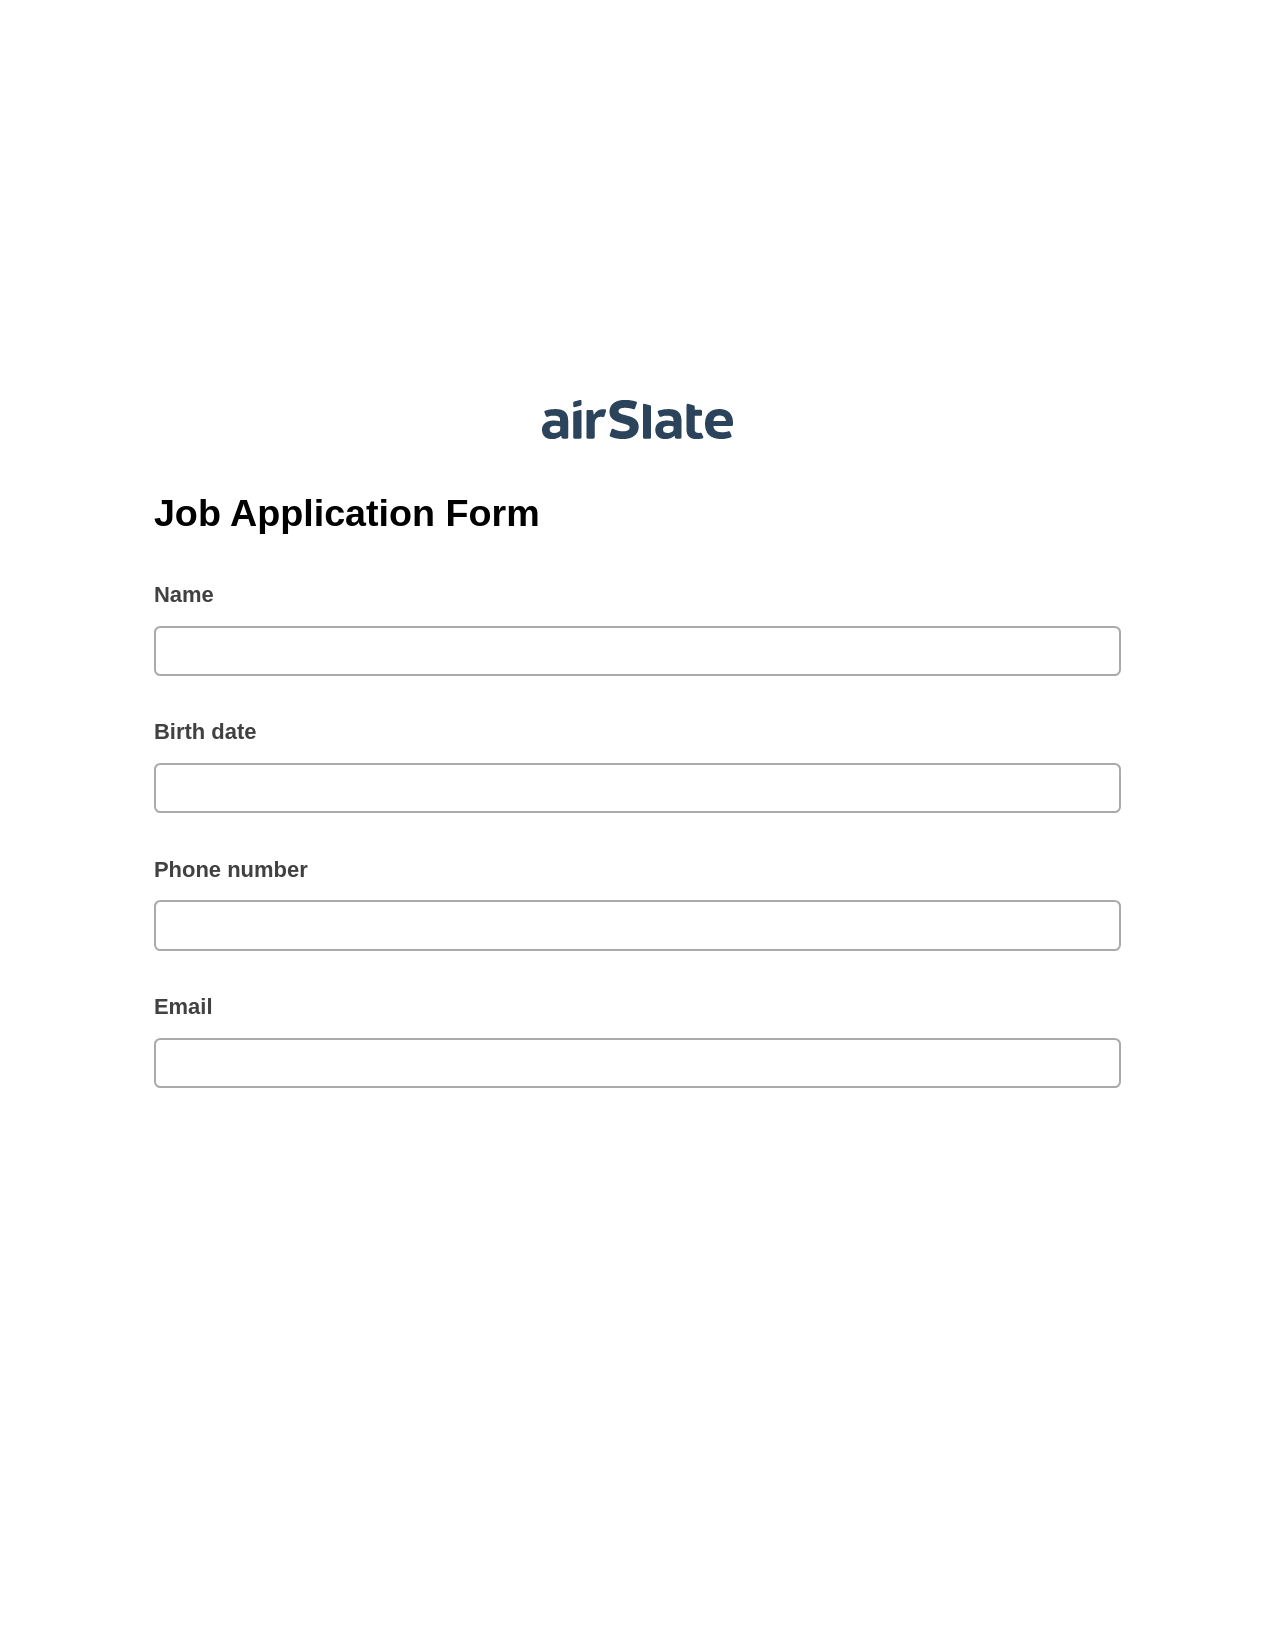 Job Application Form System Bot - Slack Two-Way Binding Bot, System Bot - Create a Slate in another Flow, Slack Notification Postfinish Bot